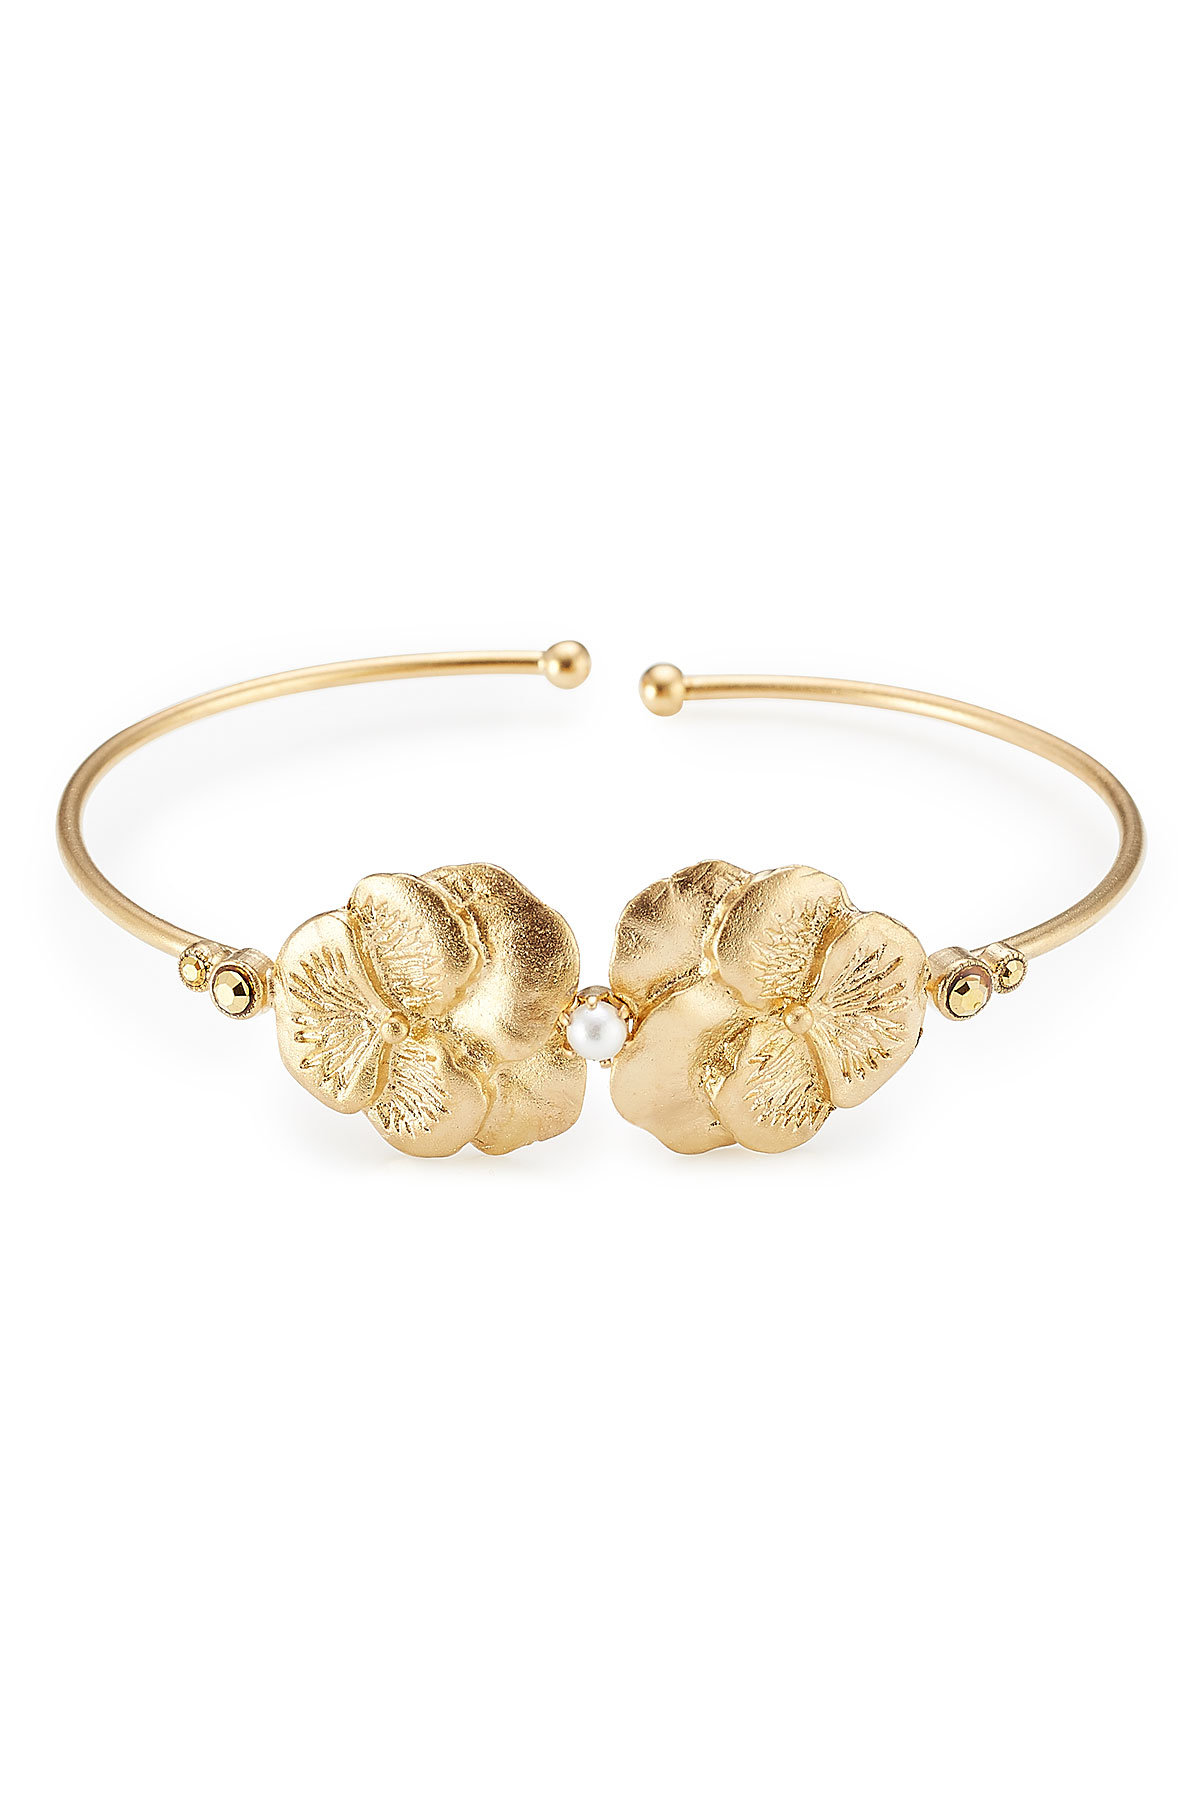 Pensée 24kt Gold-Plated Bracelet by Gas Bijoux